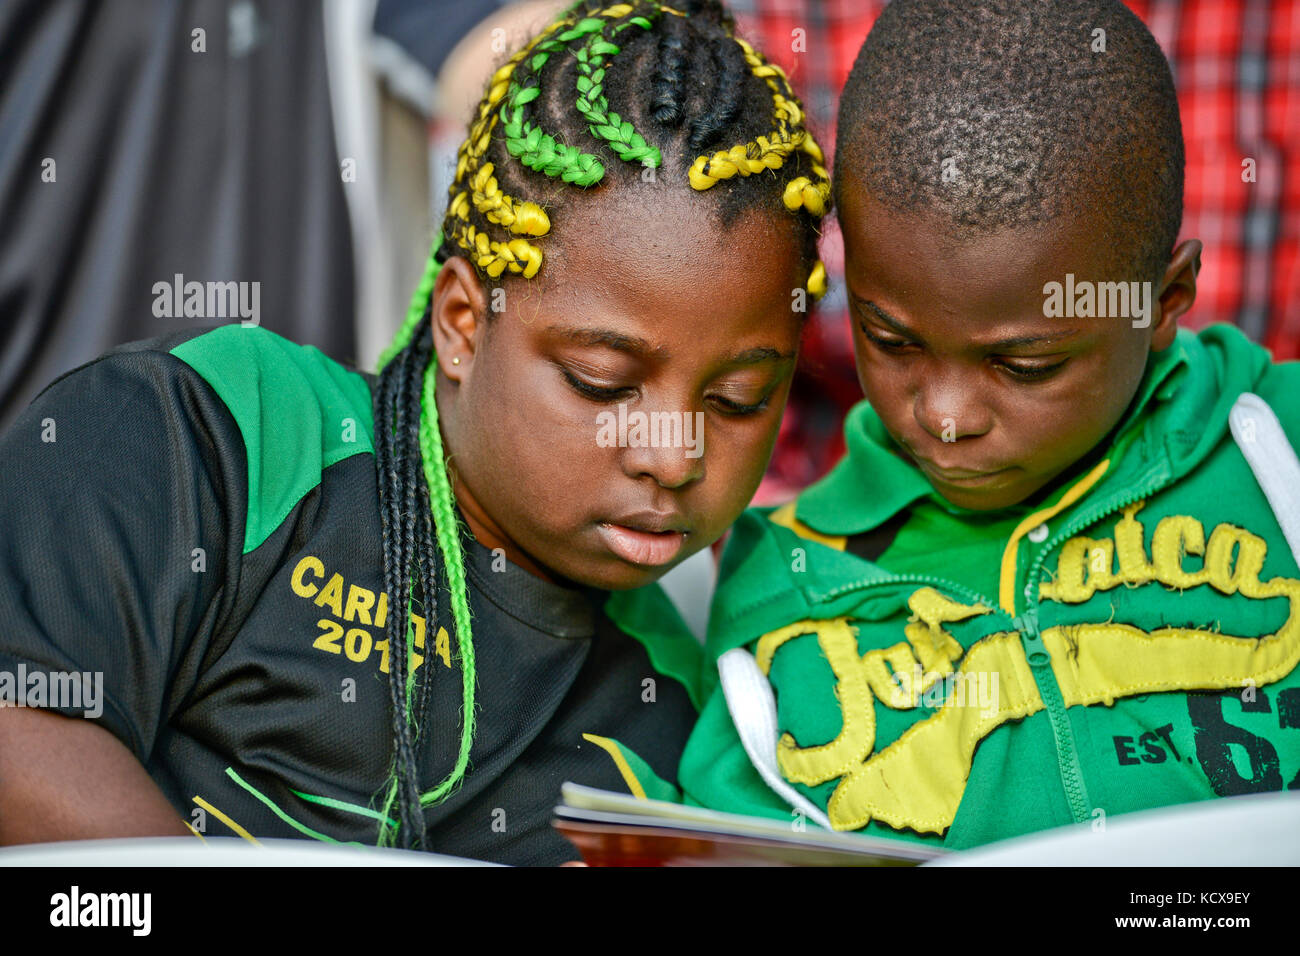 Jamaican kids reading at a stadium Stock Photo